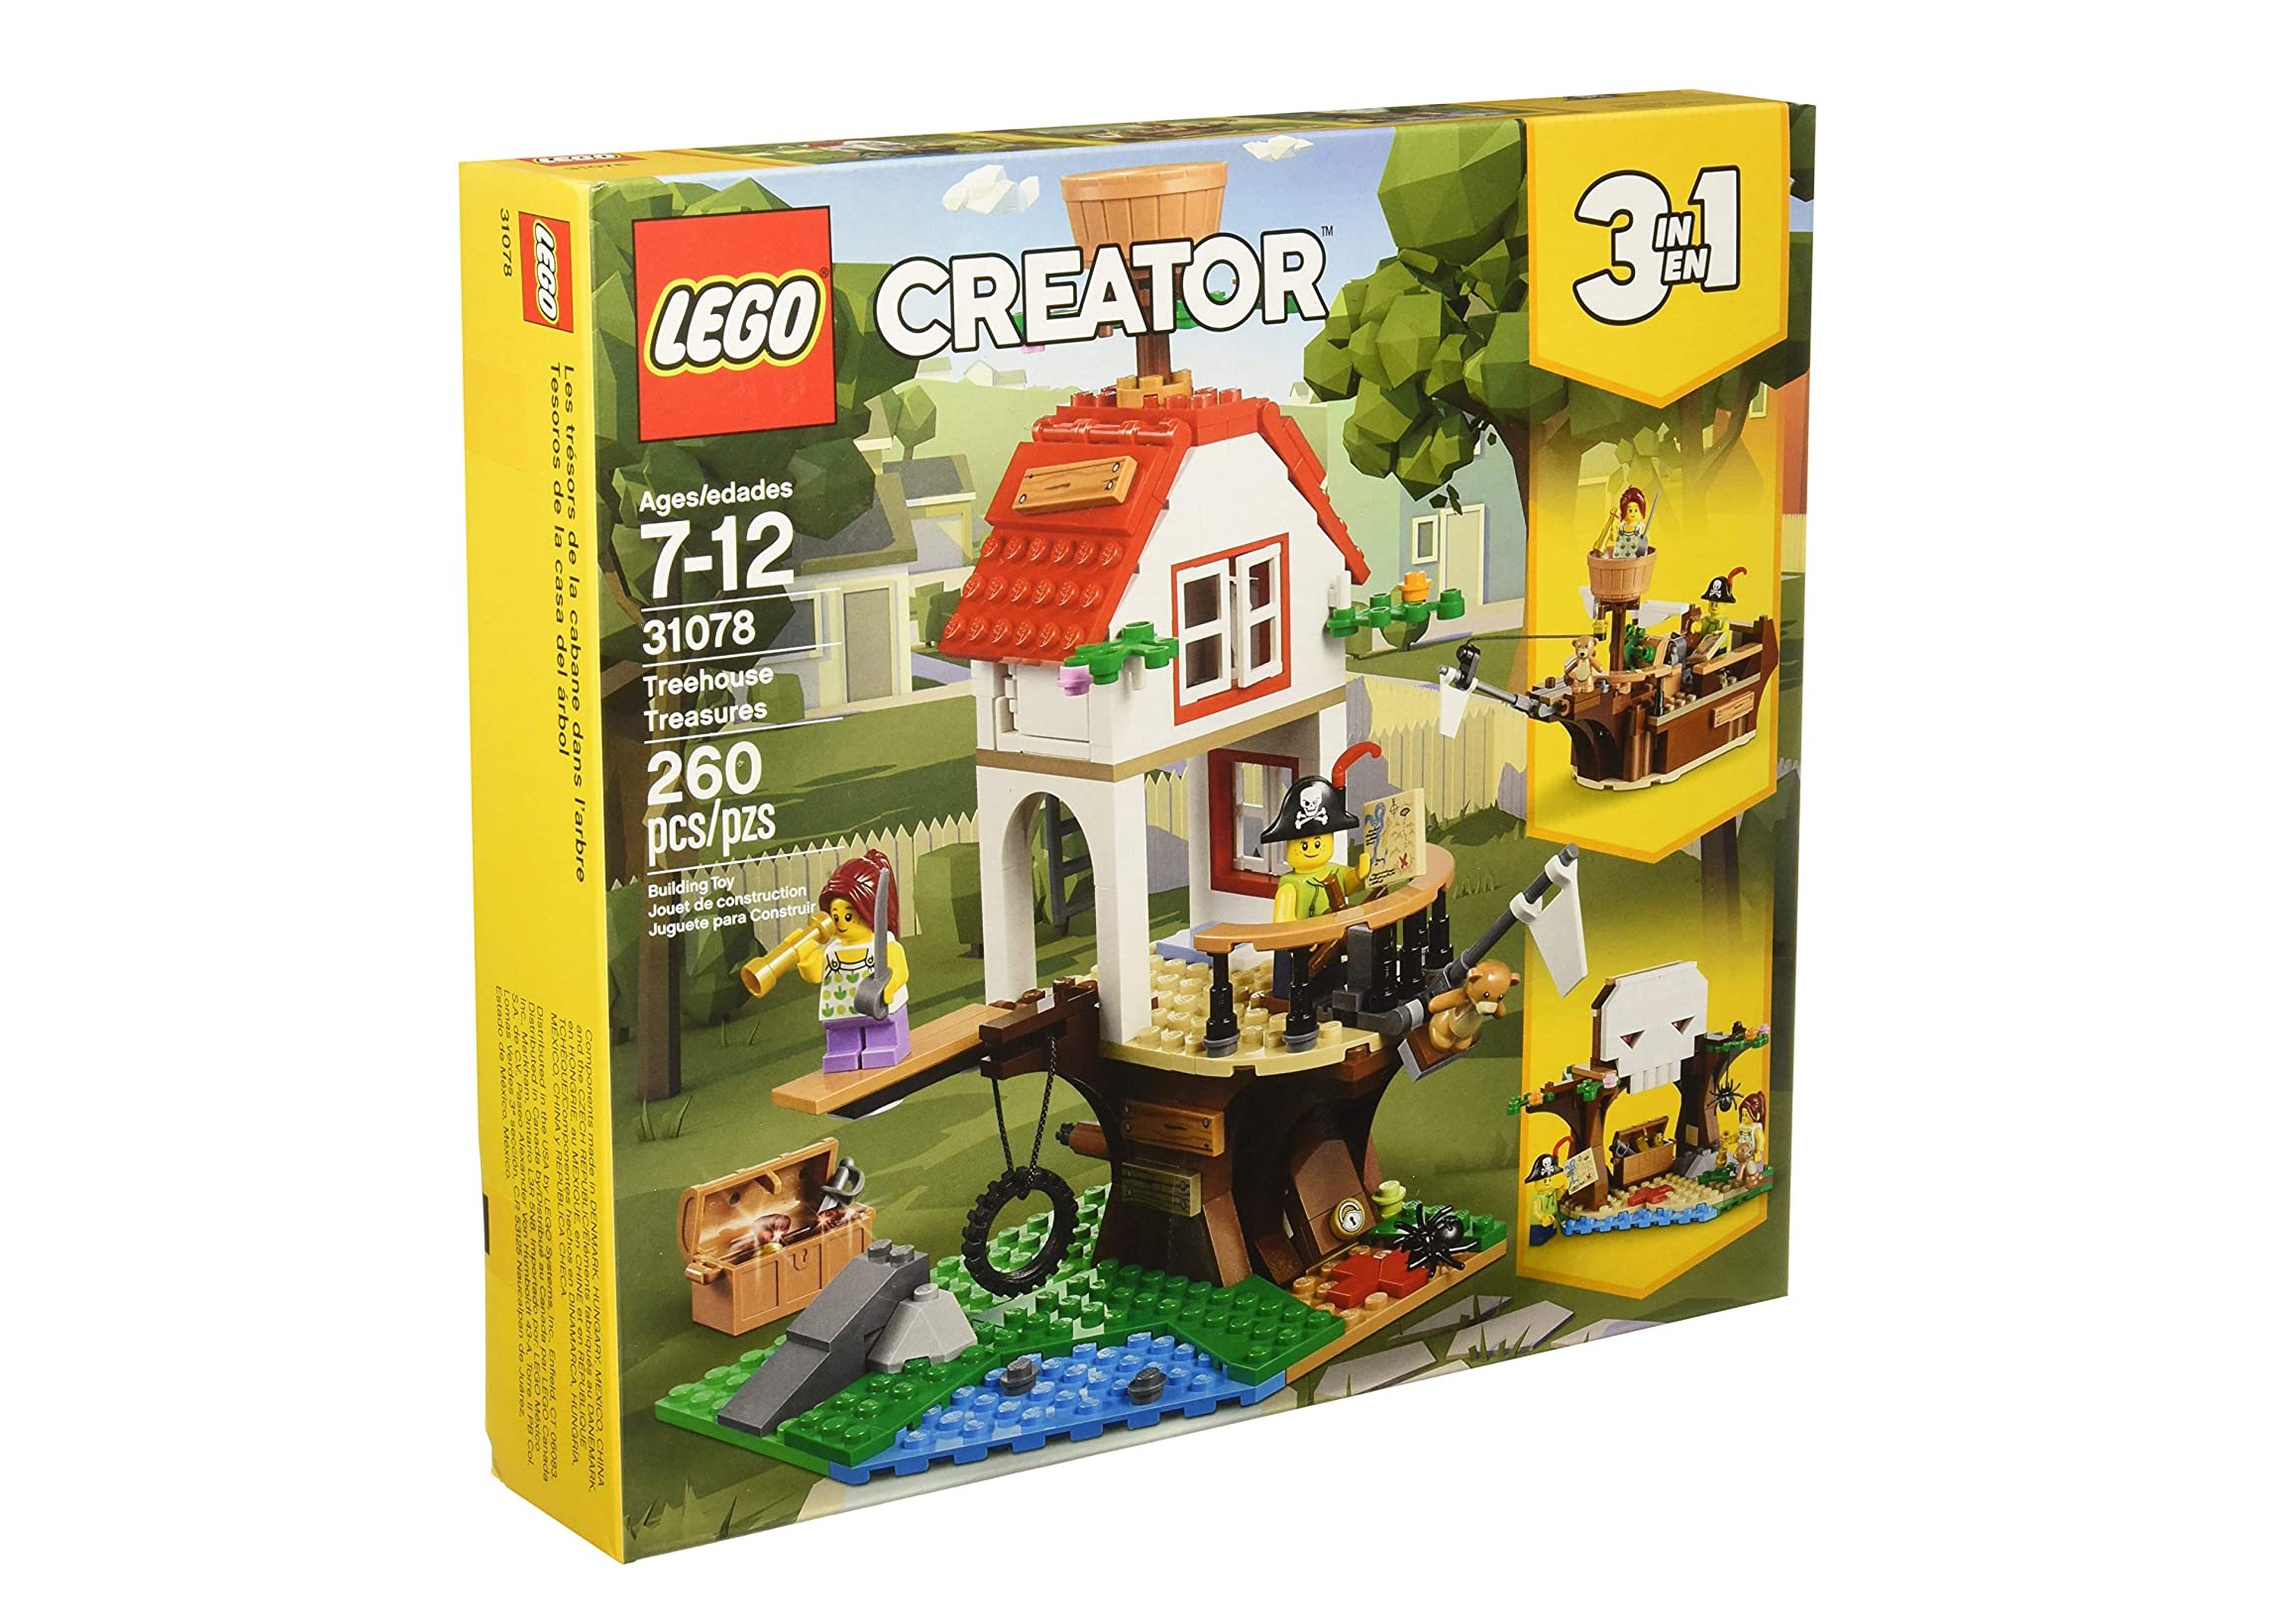 LEGO Creator 3in1 Treehouse Treasure Set 31078 - GB